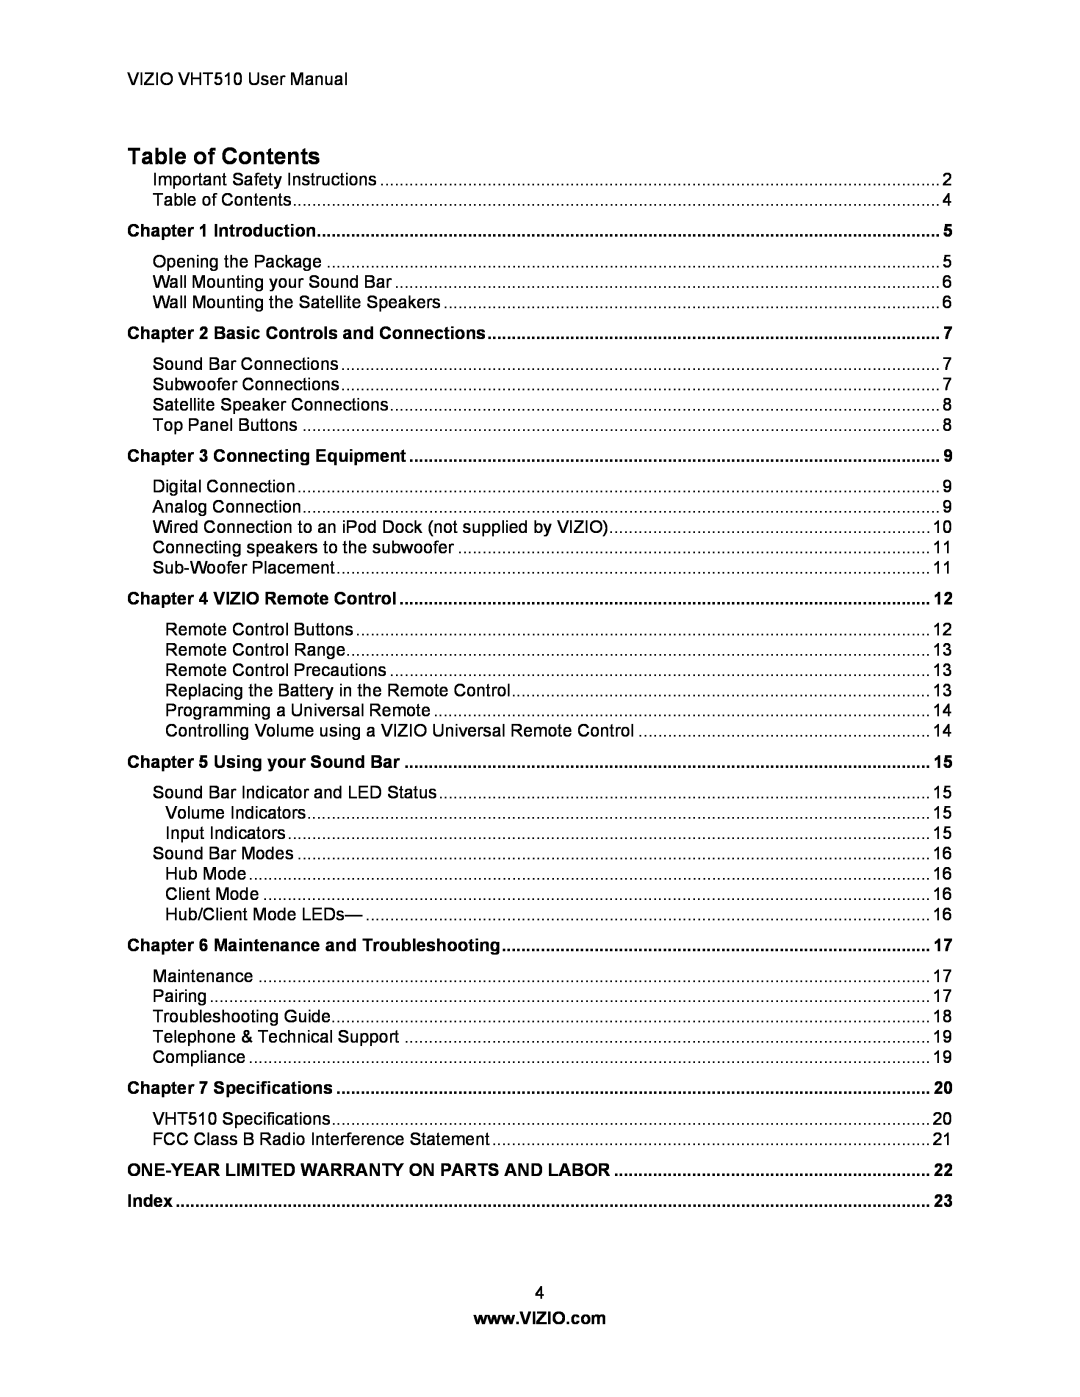 Vizio VHT510 user manual Table of Contents 